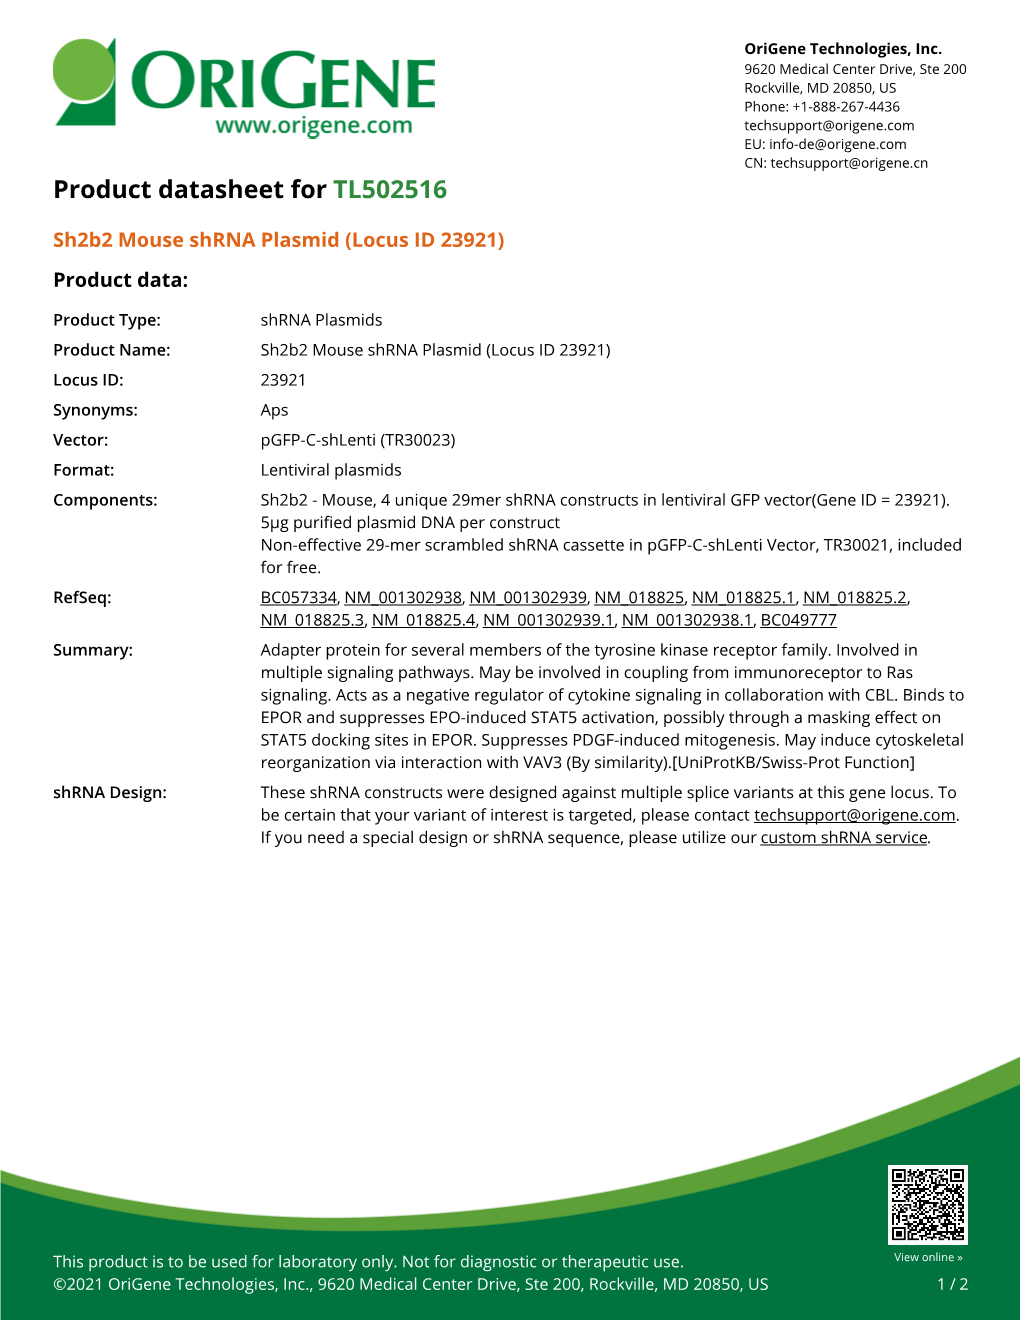 Sh2b2 Mouse Shrna Plasmid (Locus ID 23921) Product Data